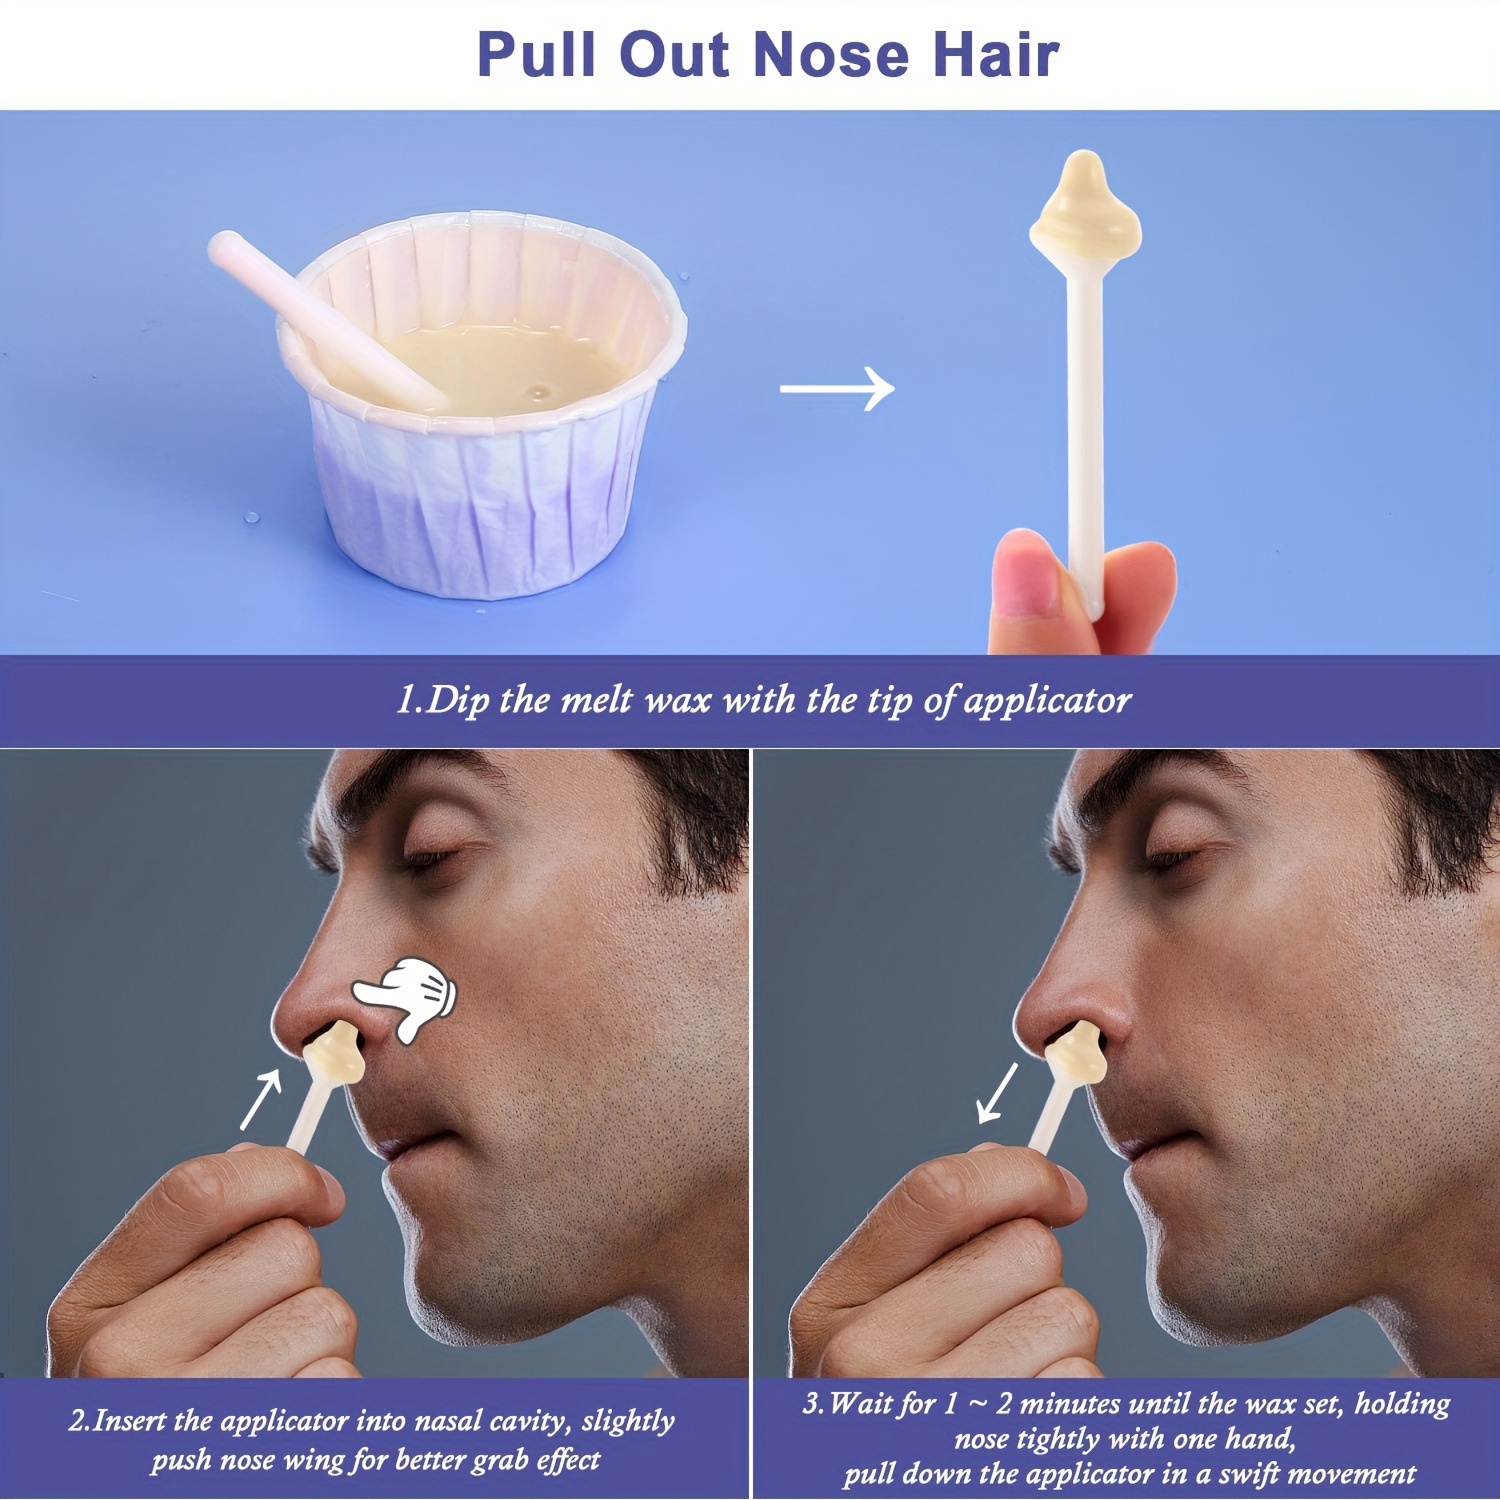 Nose Wax Kit for Men Women, Nose Hair Removal Ear Hair Waxing Kit